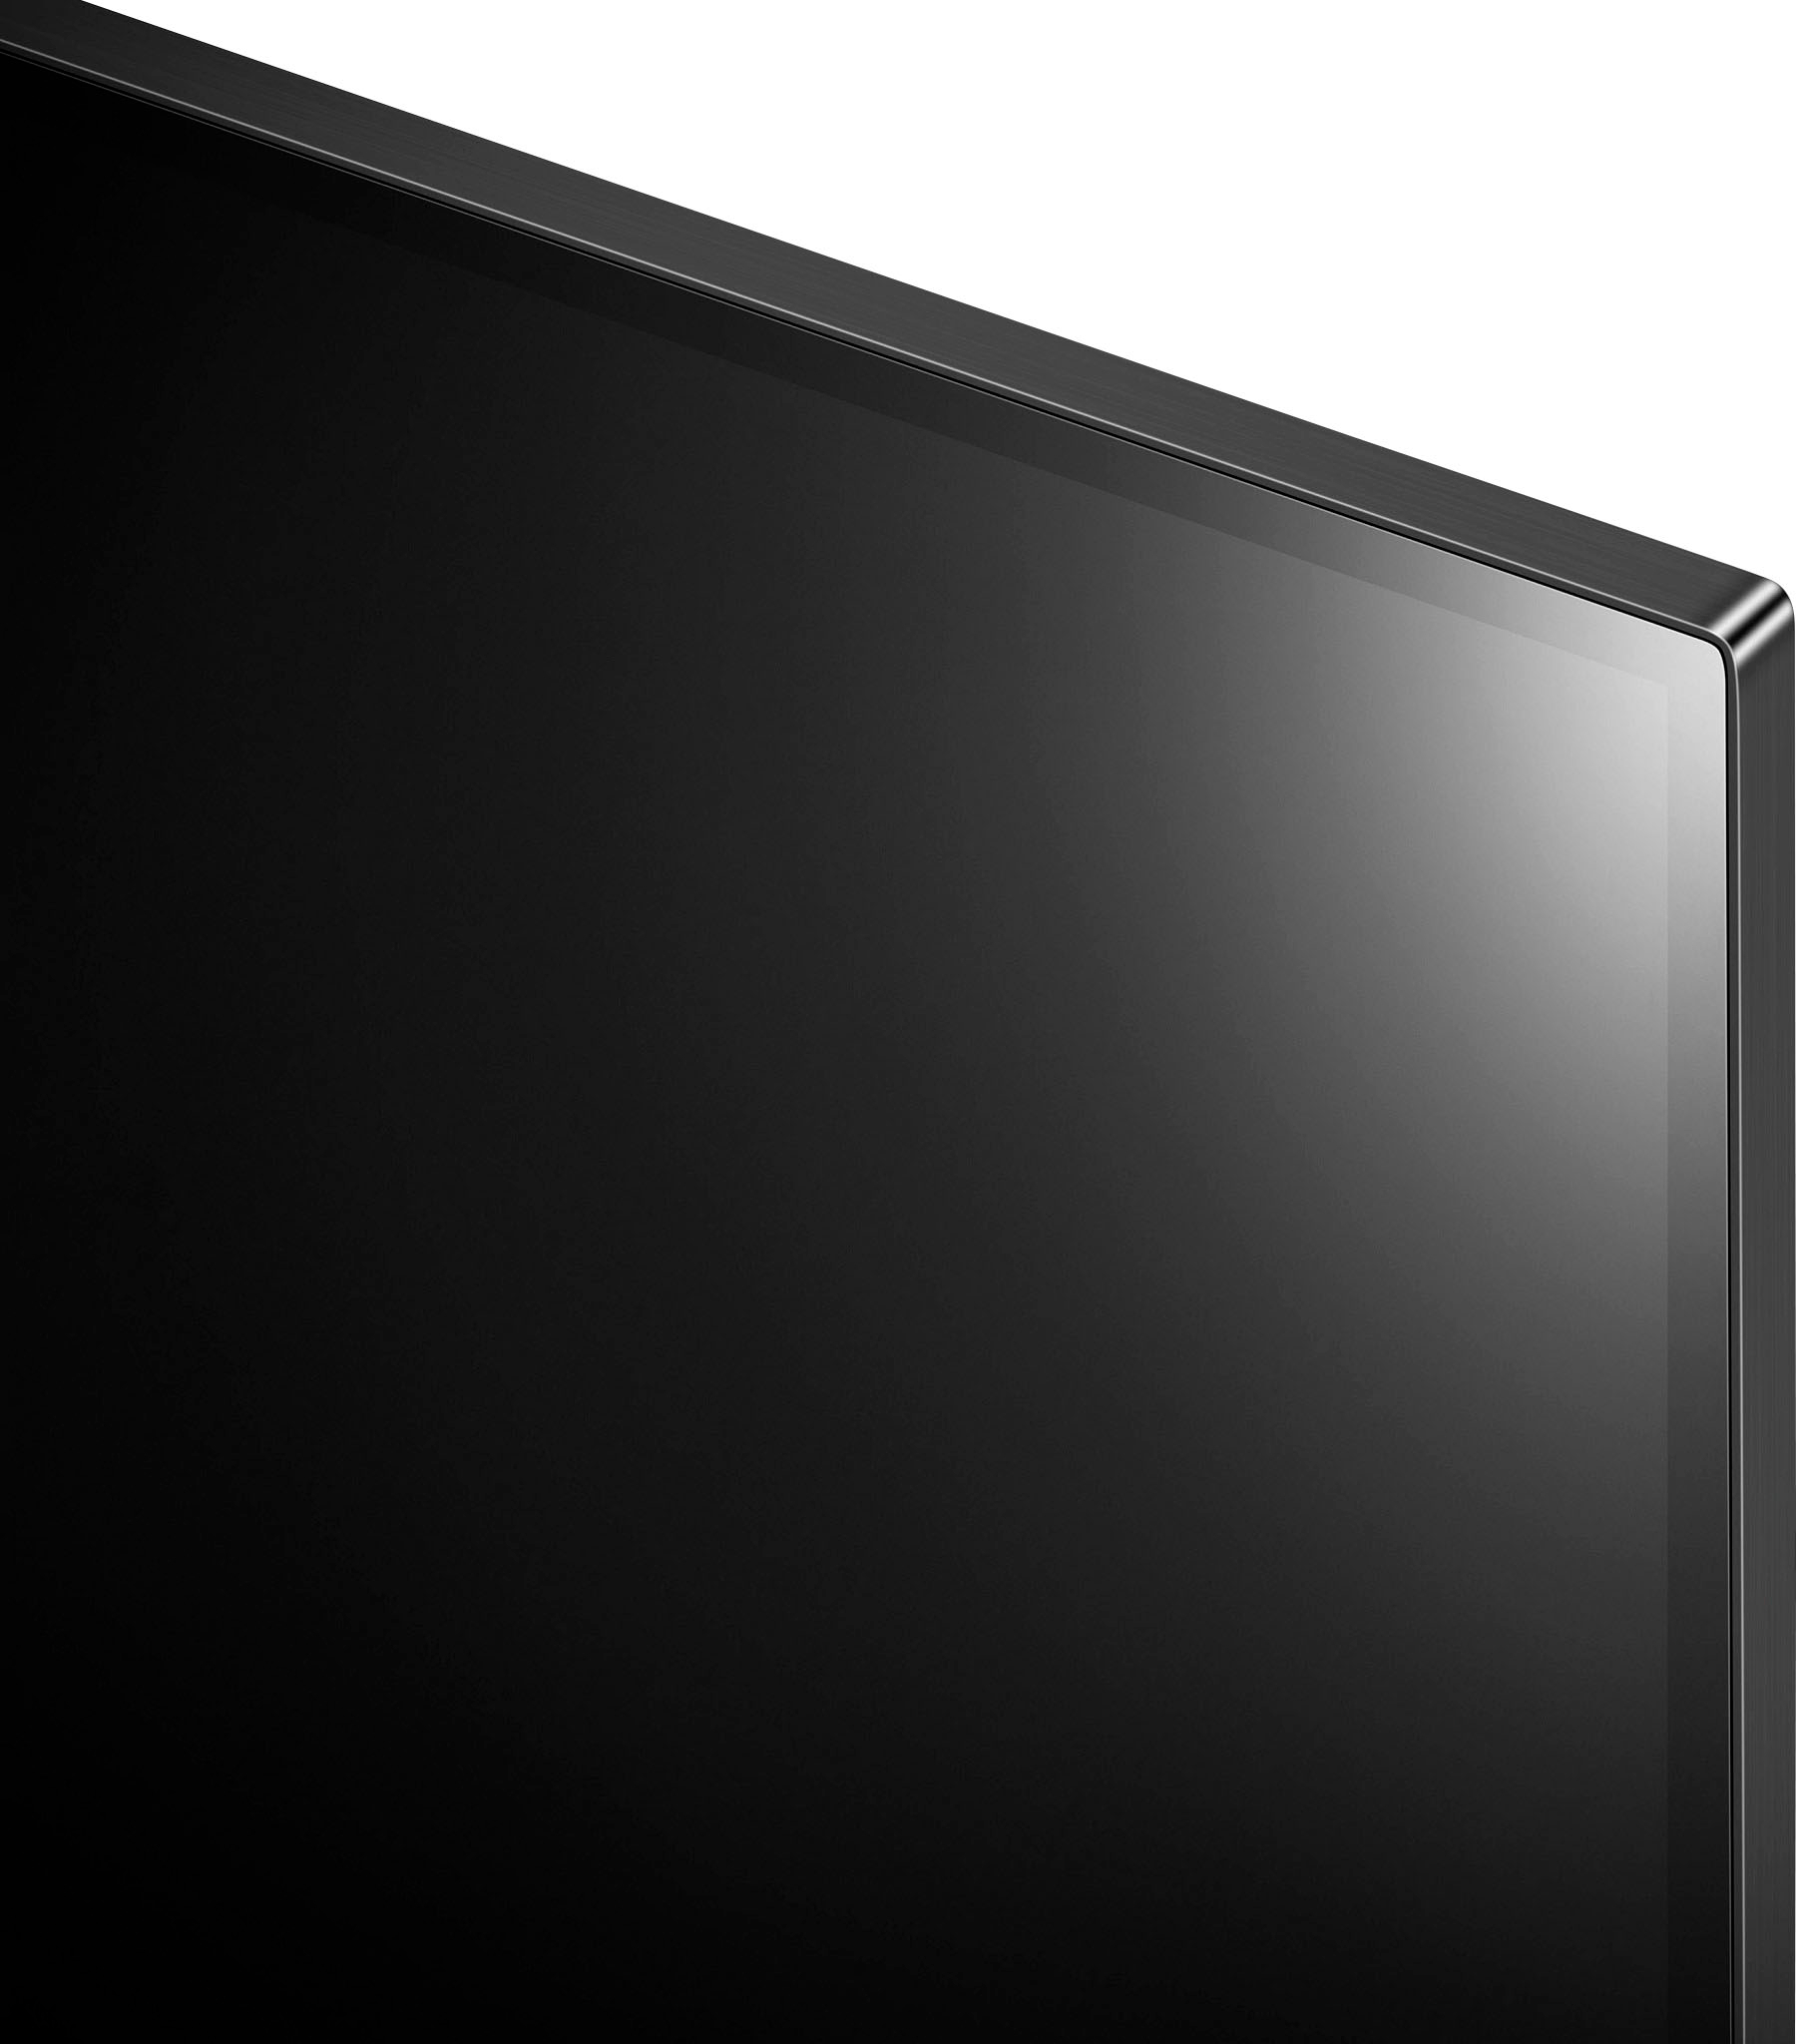 Pantalla LG OLED evo 65» C3 4K SMART TV con ThinQ AI – Rag tech